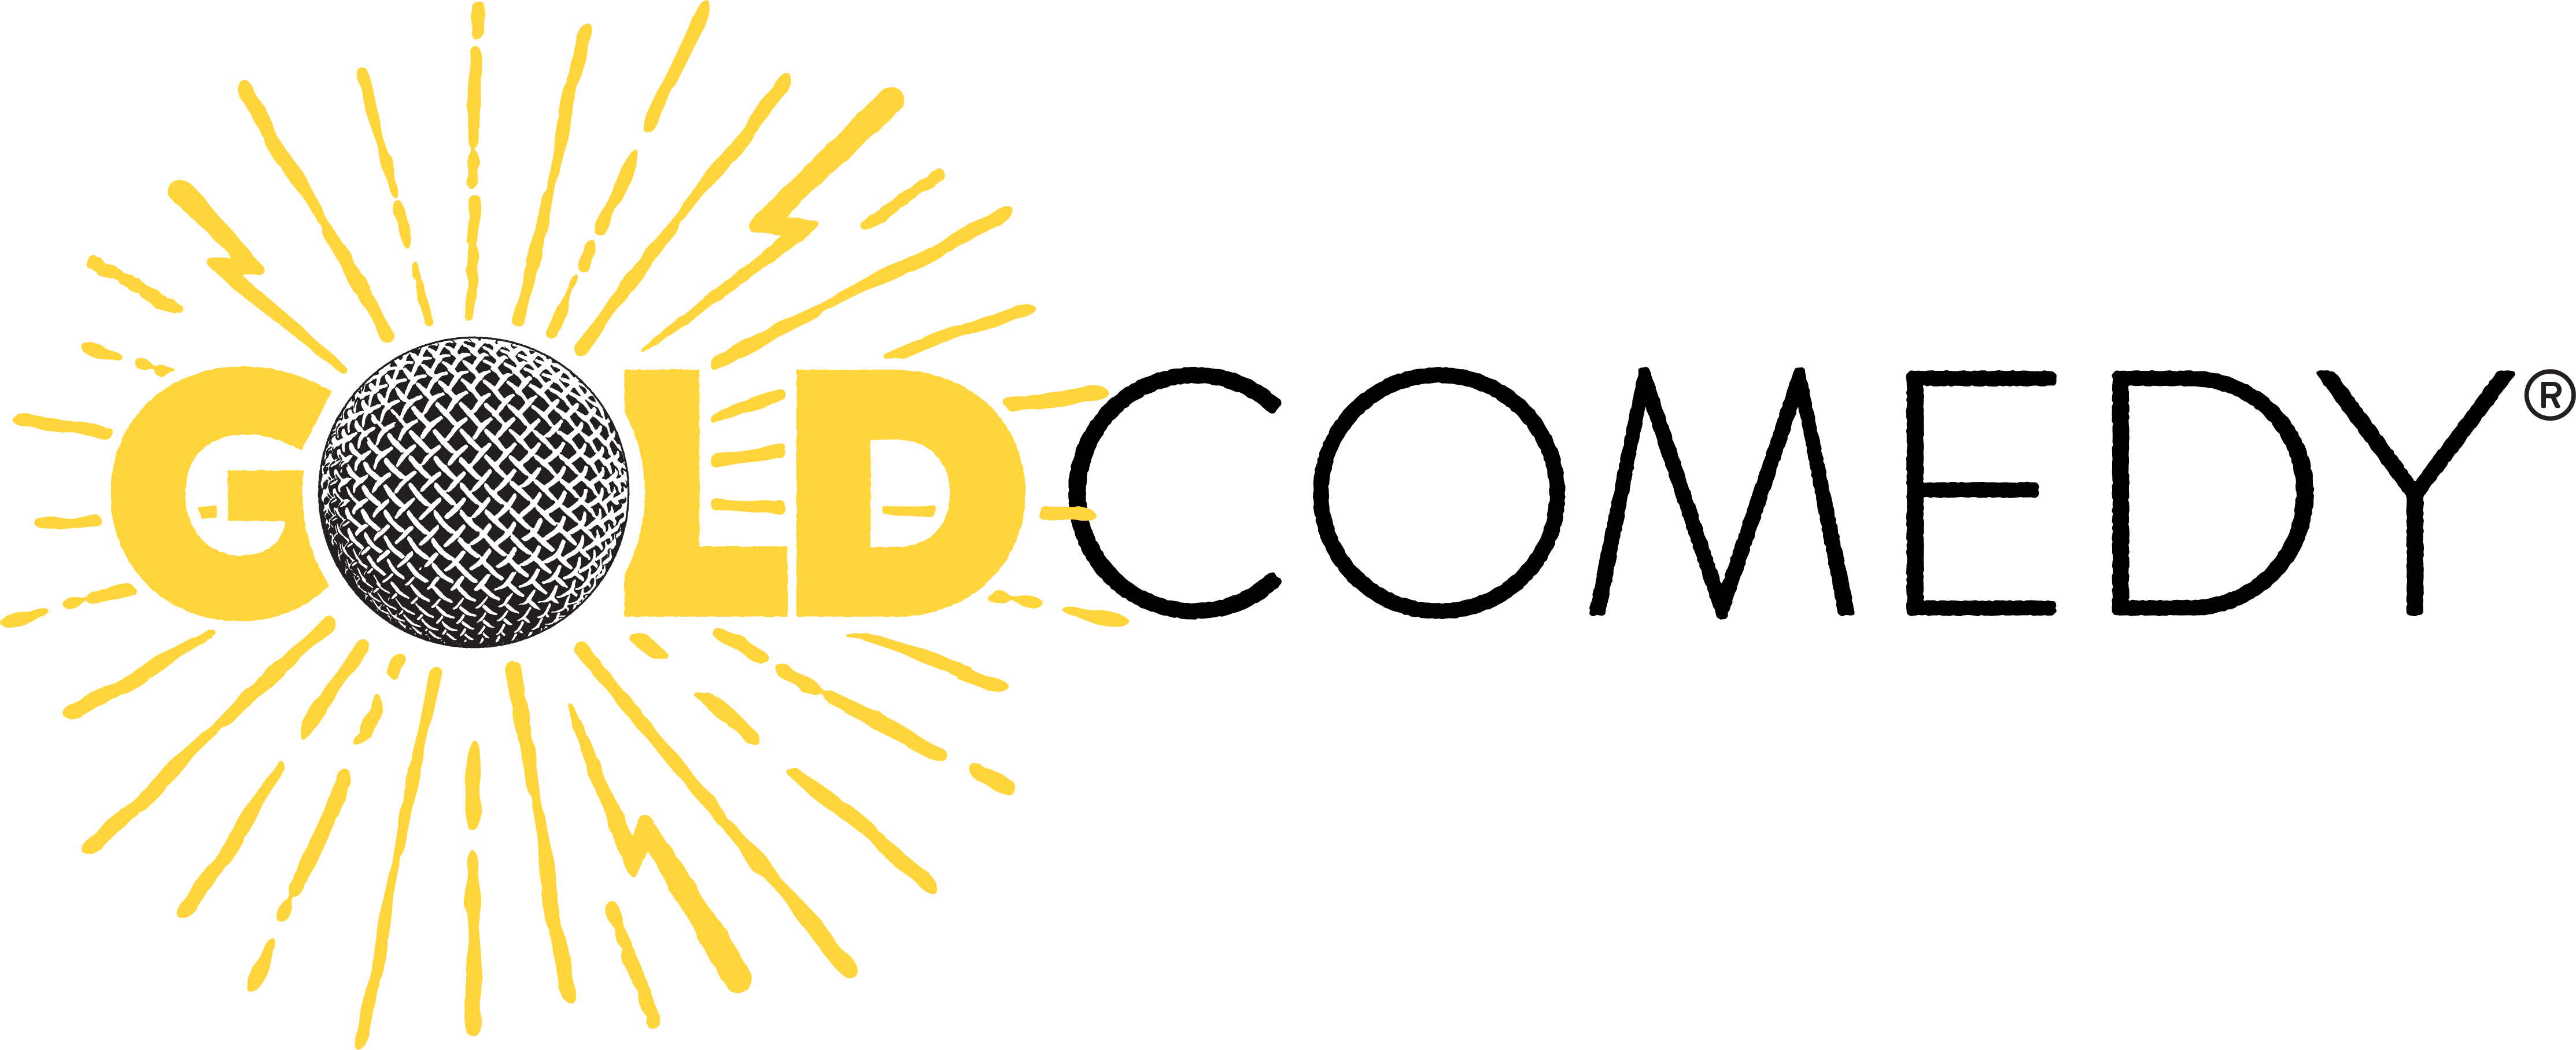 Gold Comedy logo